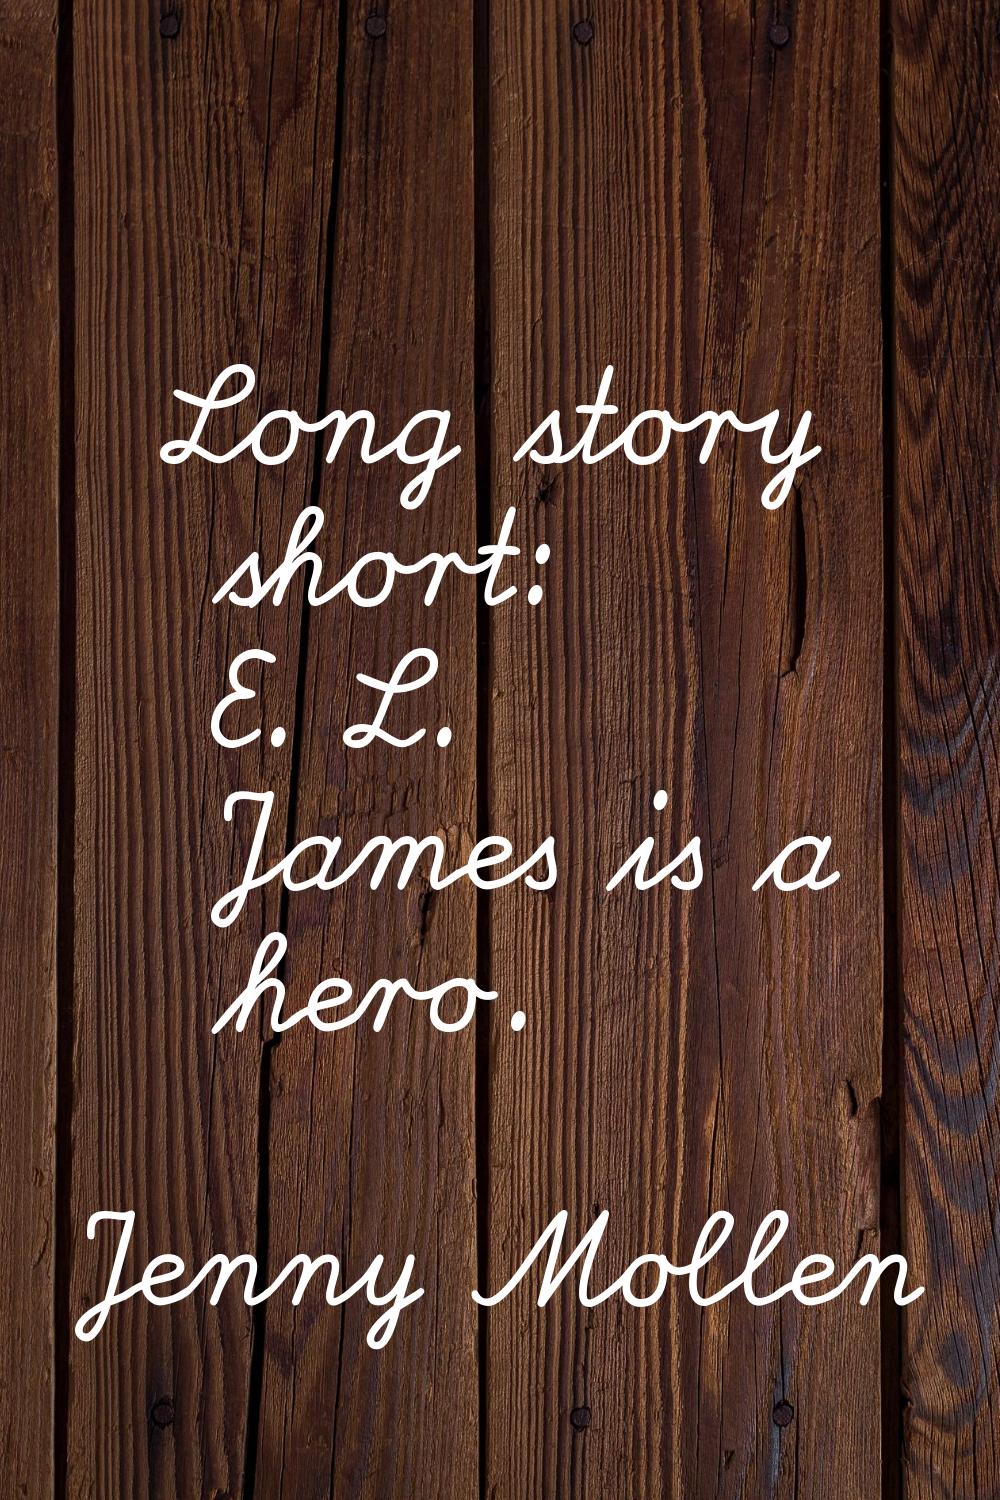 Long story short: E. L. James is a hero.